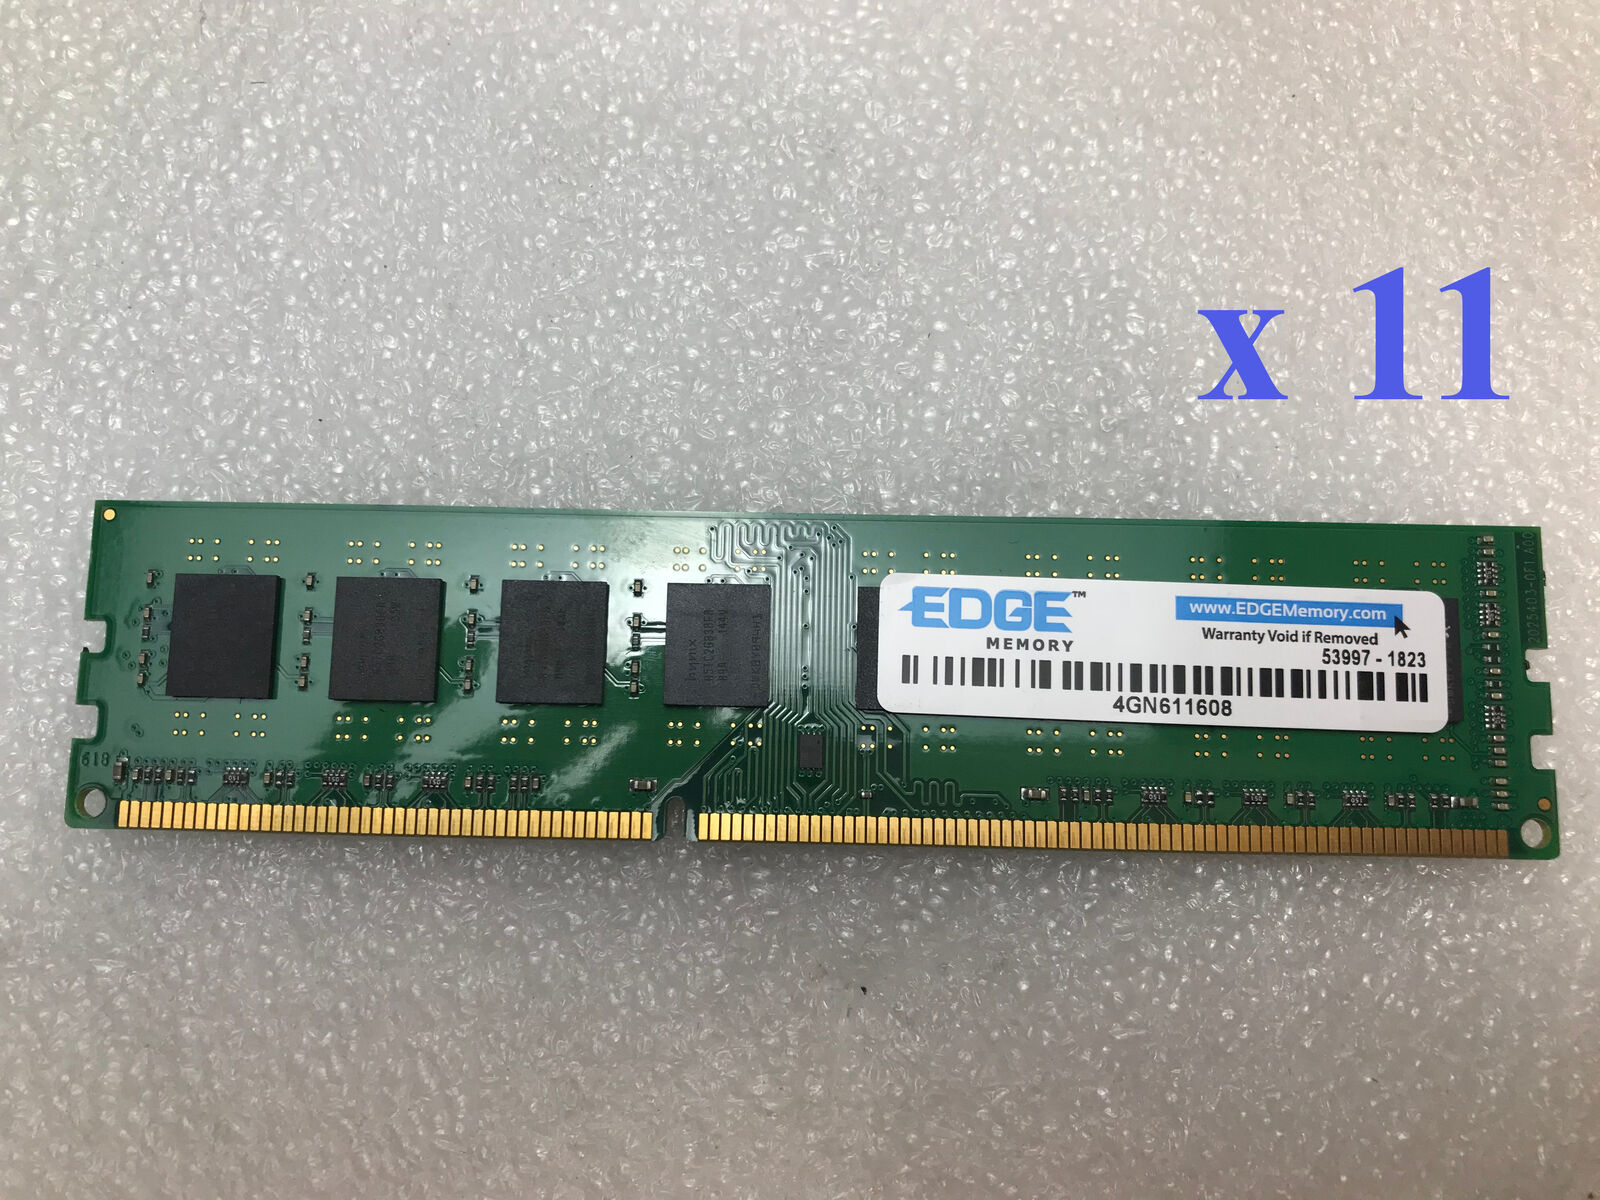 Lot of 11 EDGE RAM DIMM 4GB DDR3 1333MHz PC3-10600 non-ECC 4GN611608 44GB TOTAL